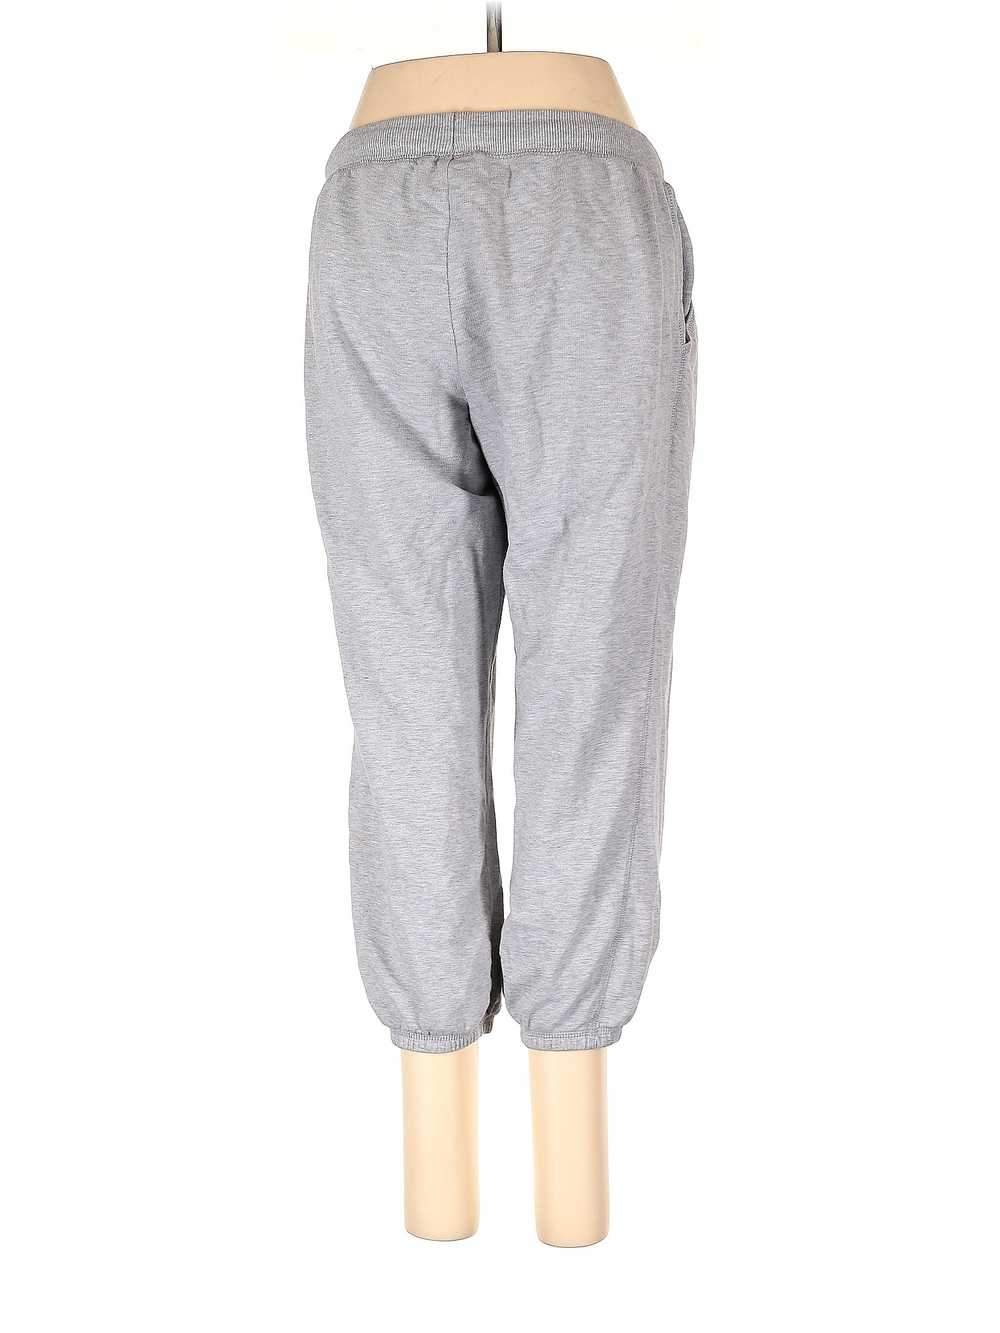 SONOMA life + style Women Gray Sweatpants M - image 2